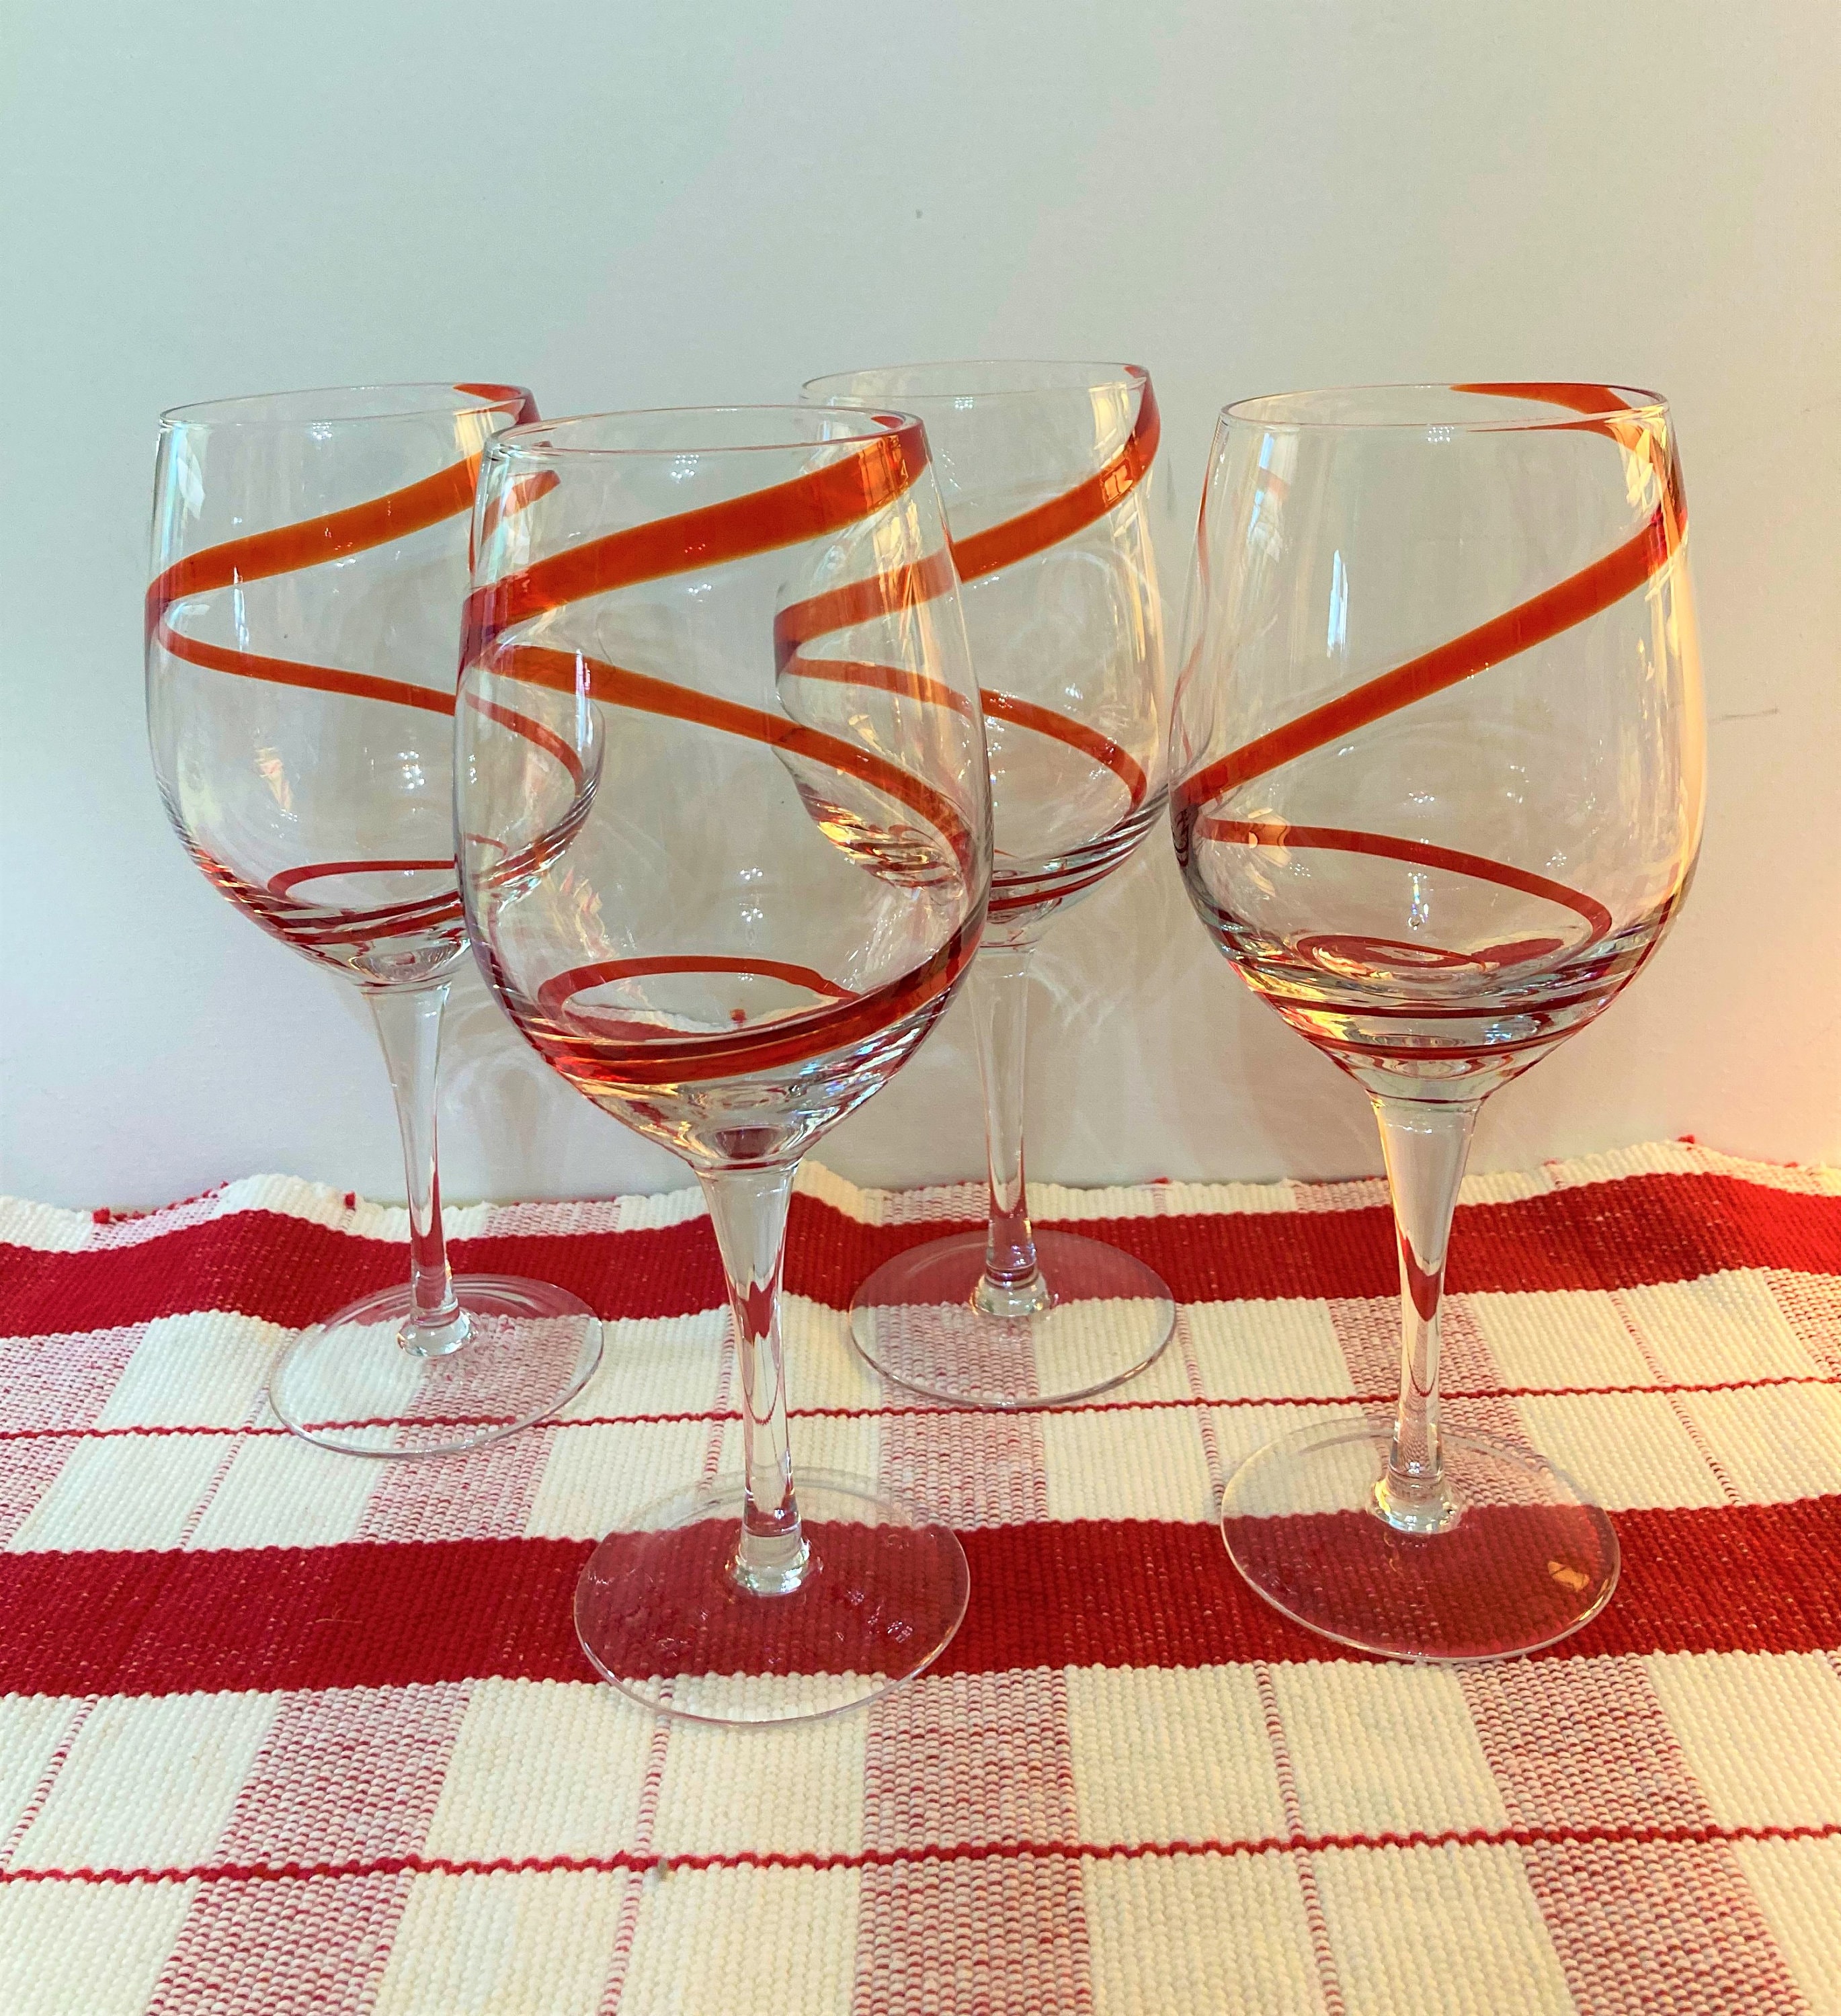 12 oz. Stemmed Swirl Acrylic Wine Glasses Set (Set of 4)